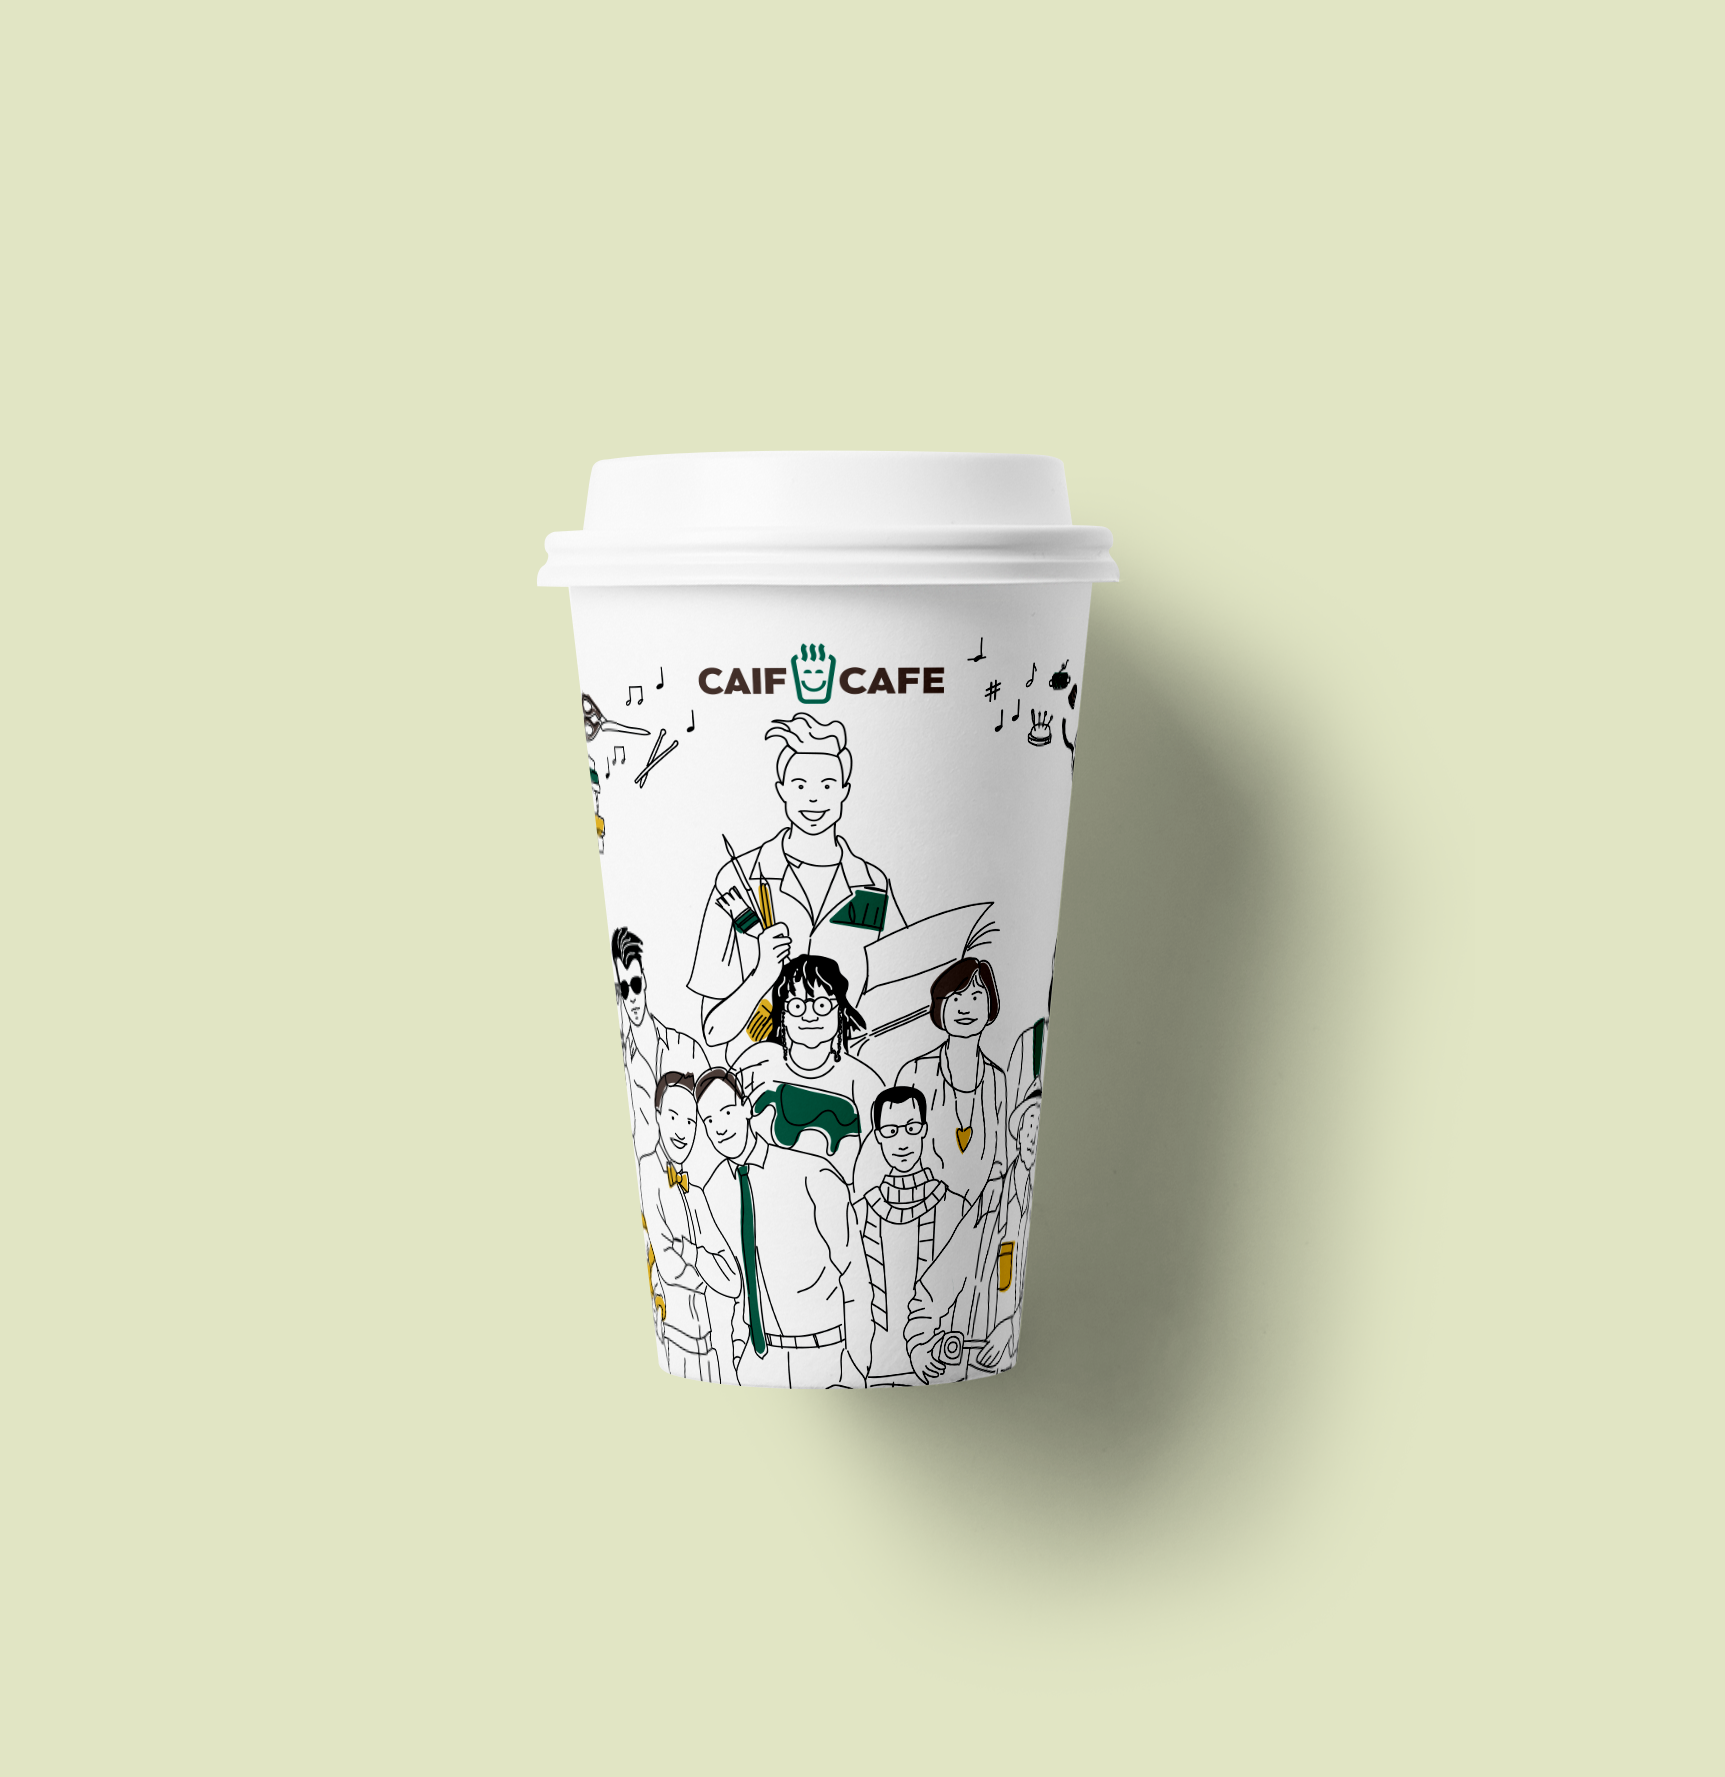 caif cafe kavos puodelio dizainas, kultūra